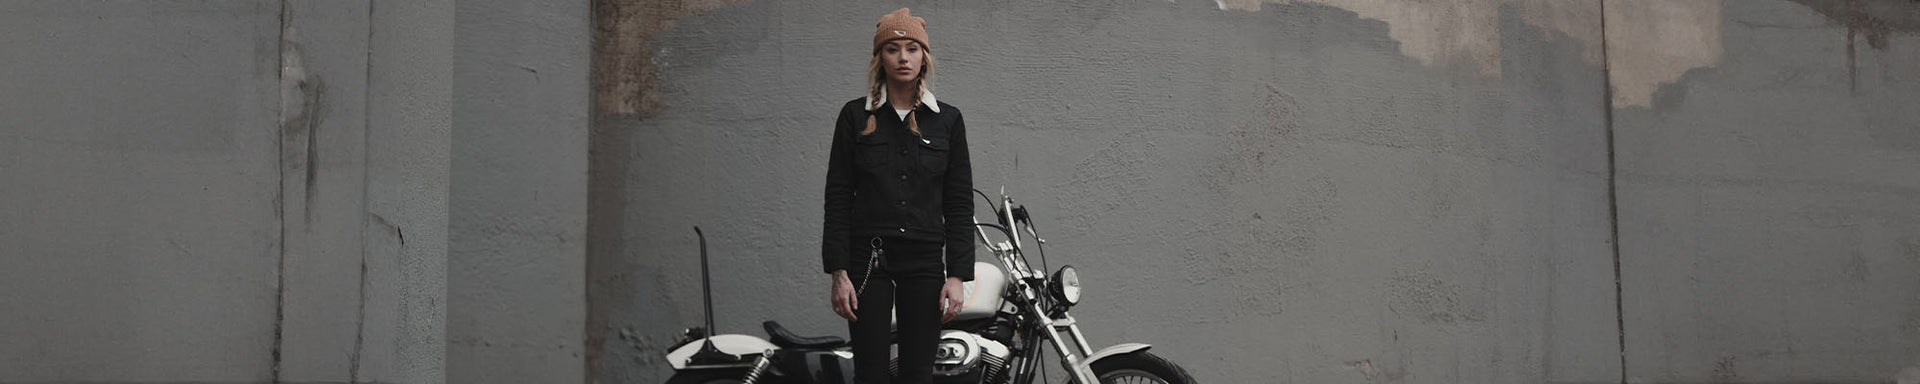 Women's Motorcycle Jackets & Tops